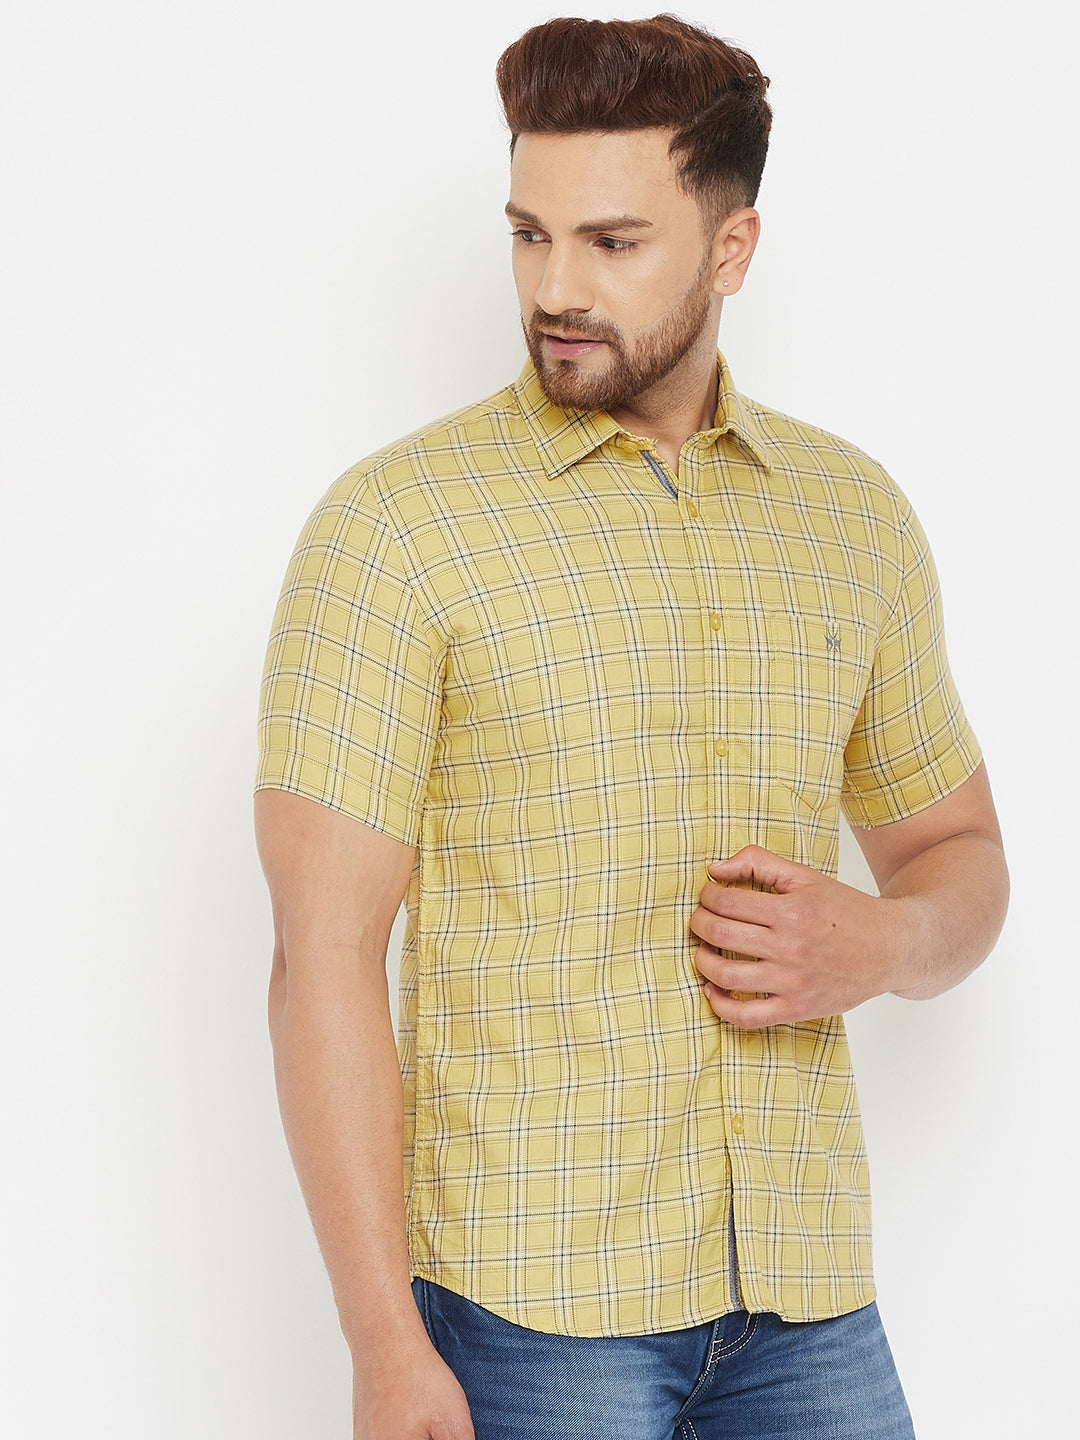 Yellow Checked Casual Shirt - Men Shirts